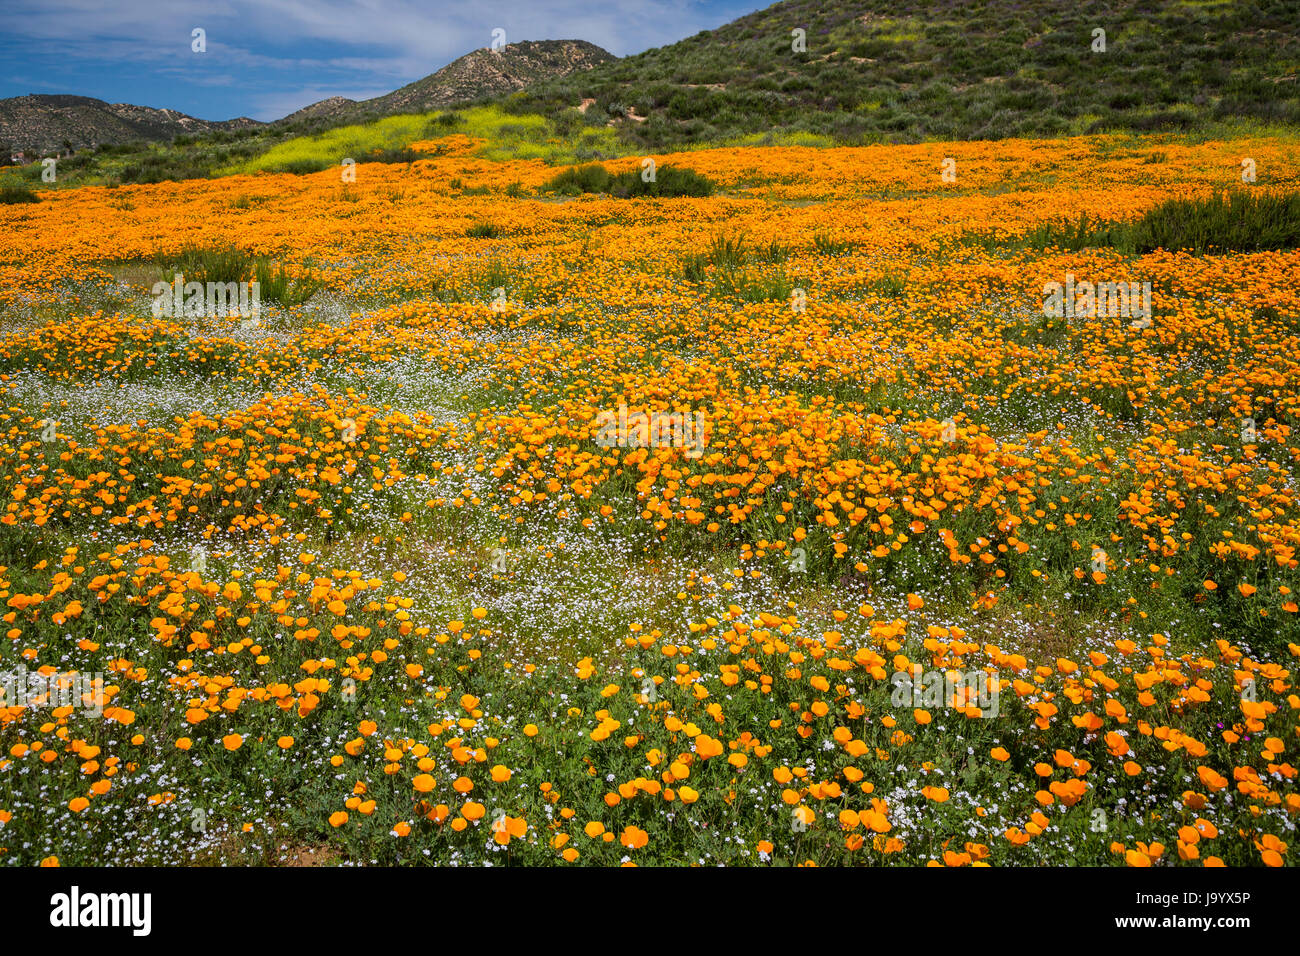 La primavera amapola de California florece en la ladera de una colina, cerca de Murrieta, California, USA. Foto de stock